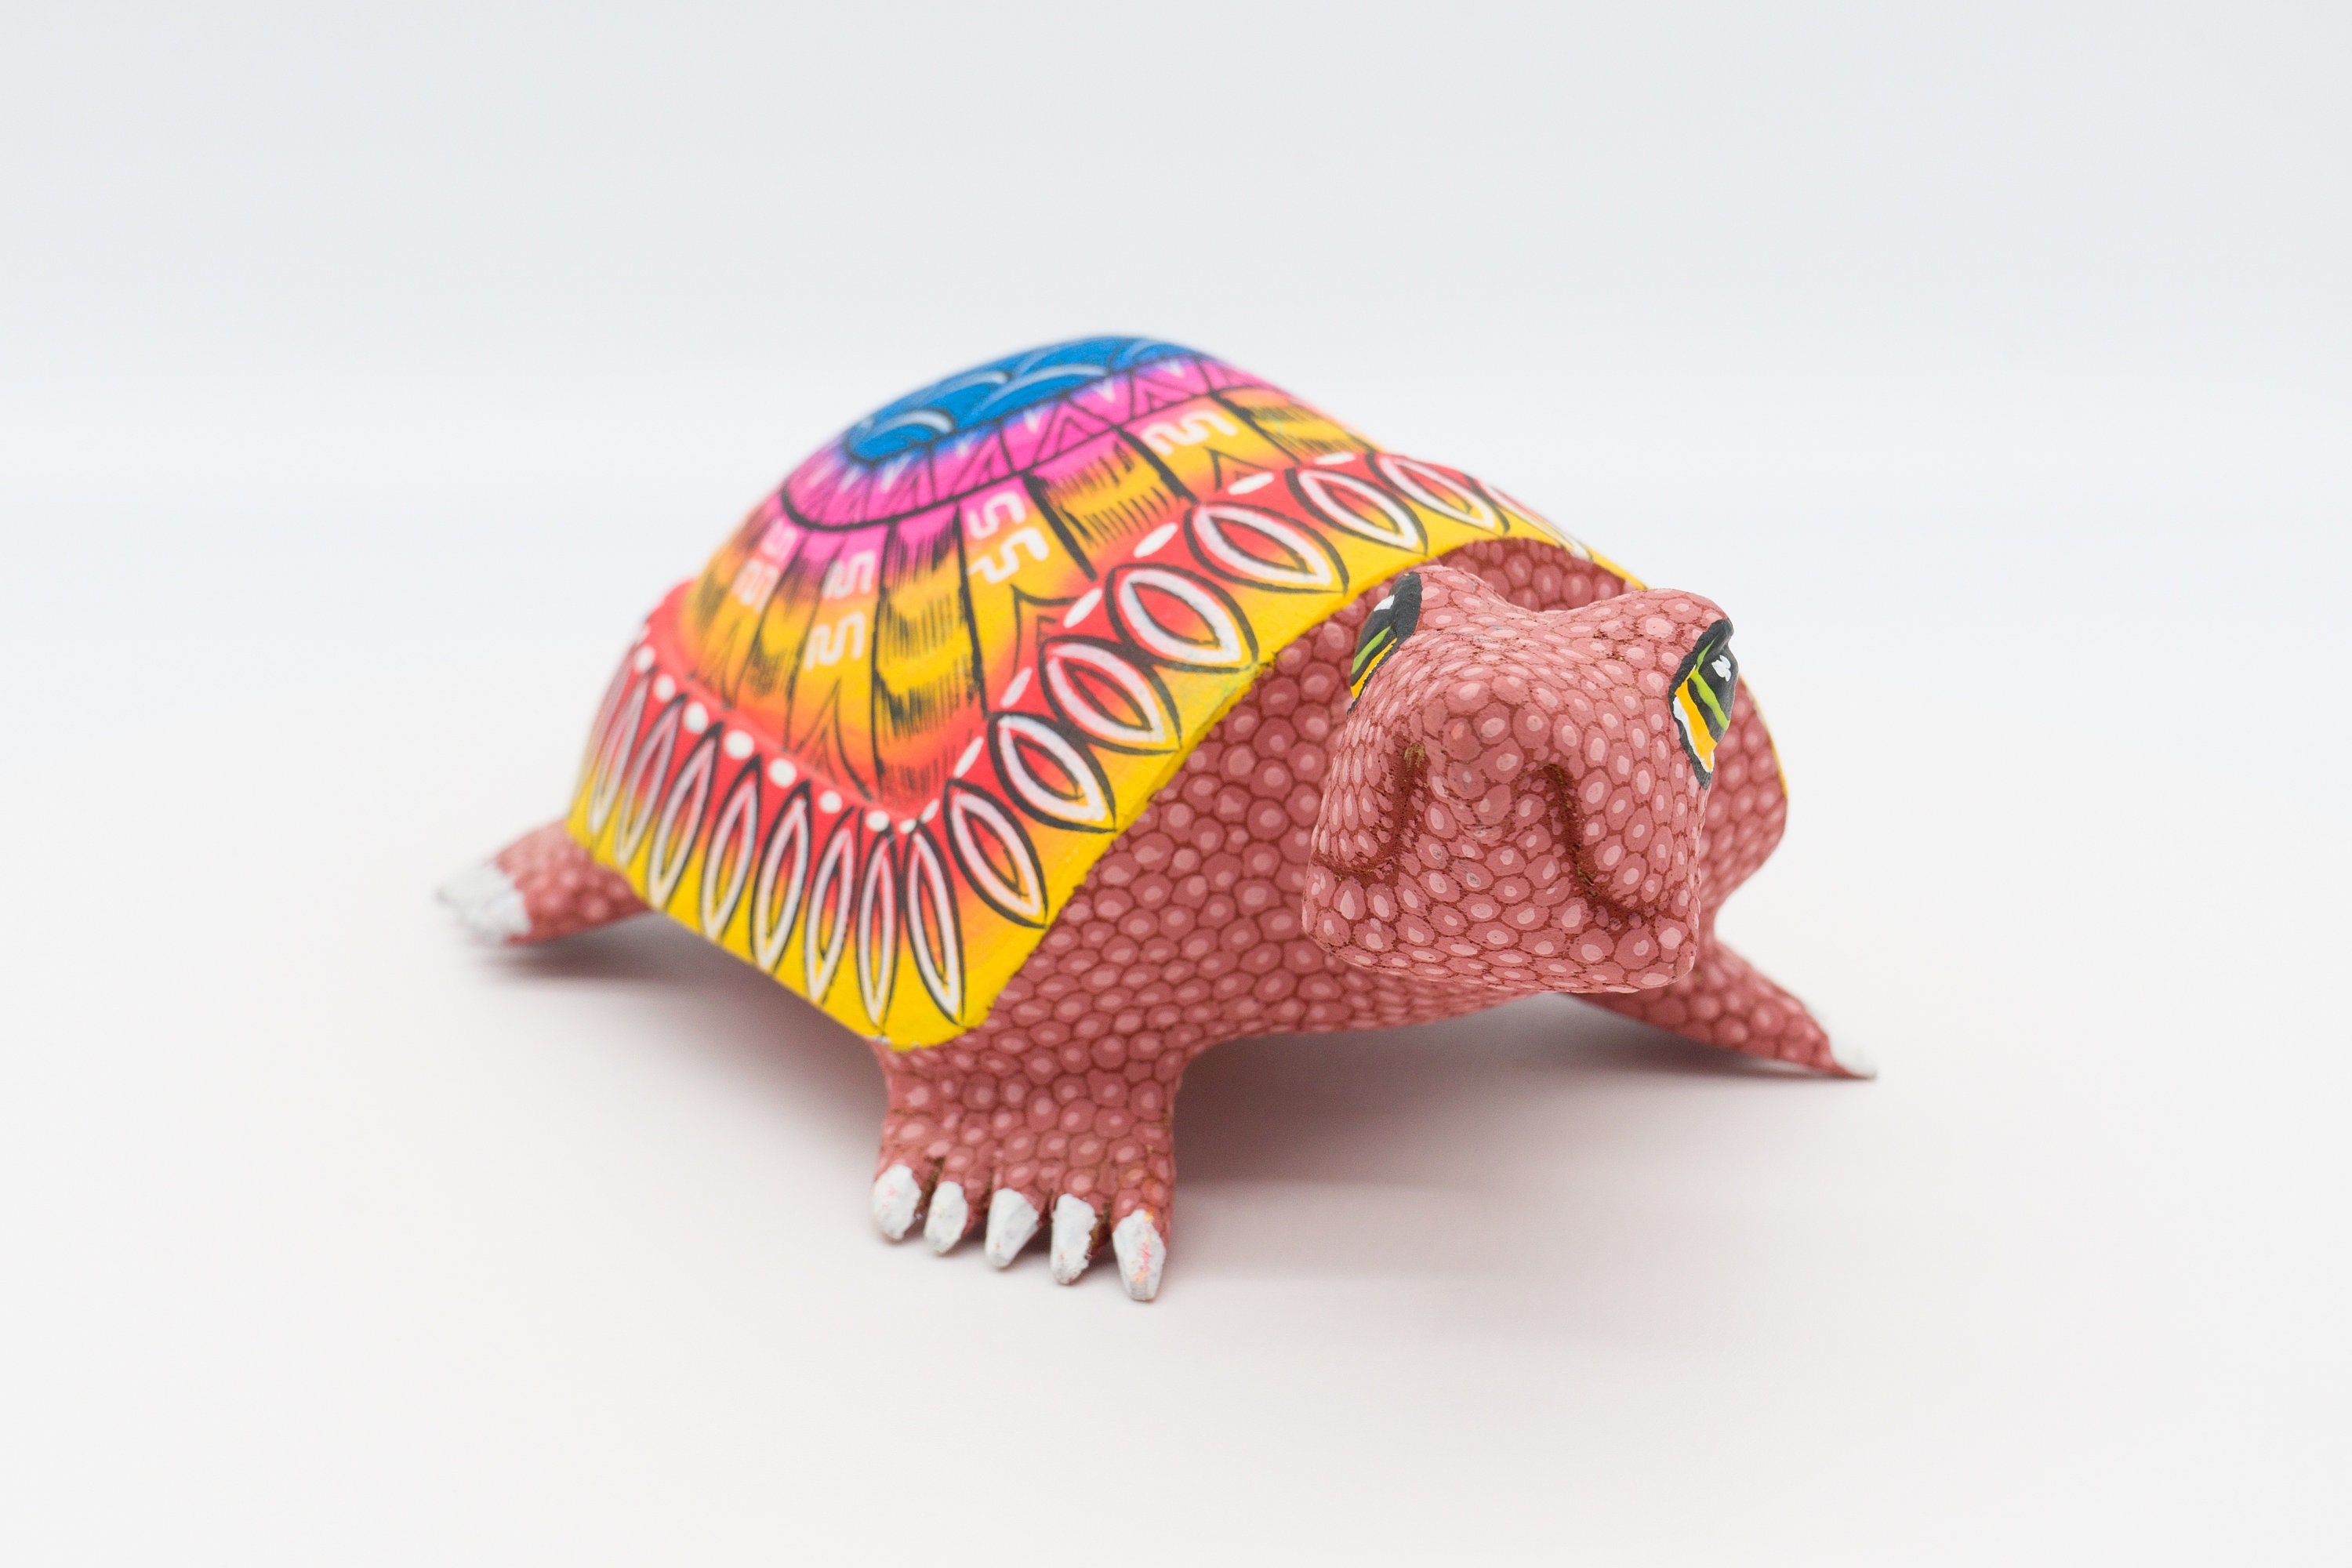 Mini Turtles Alebrije Handcarve Wood Decoration Figure